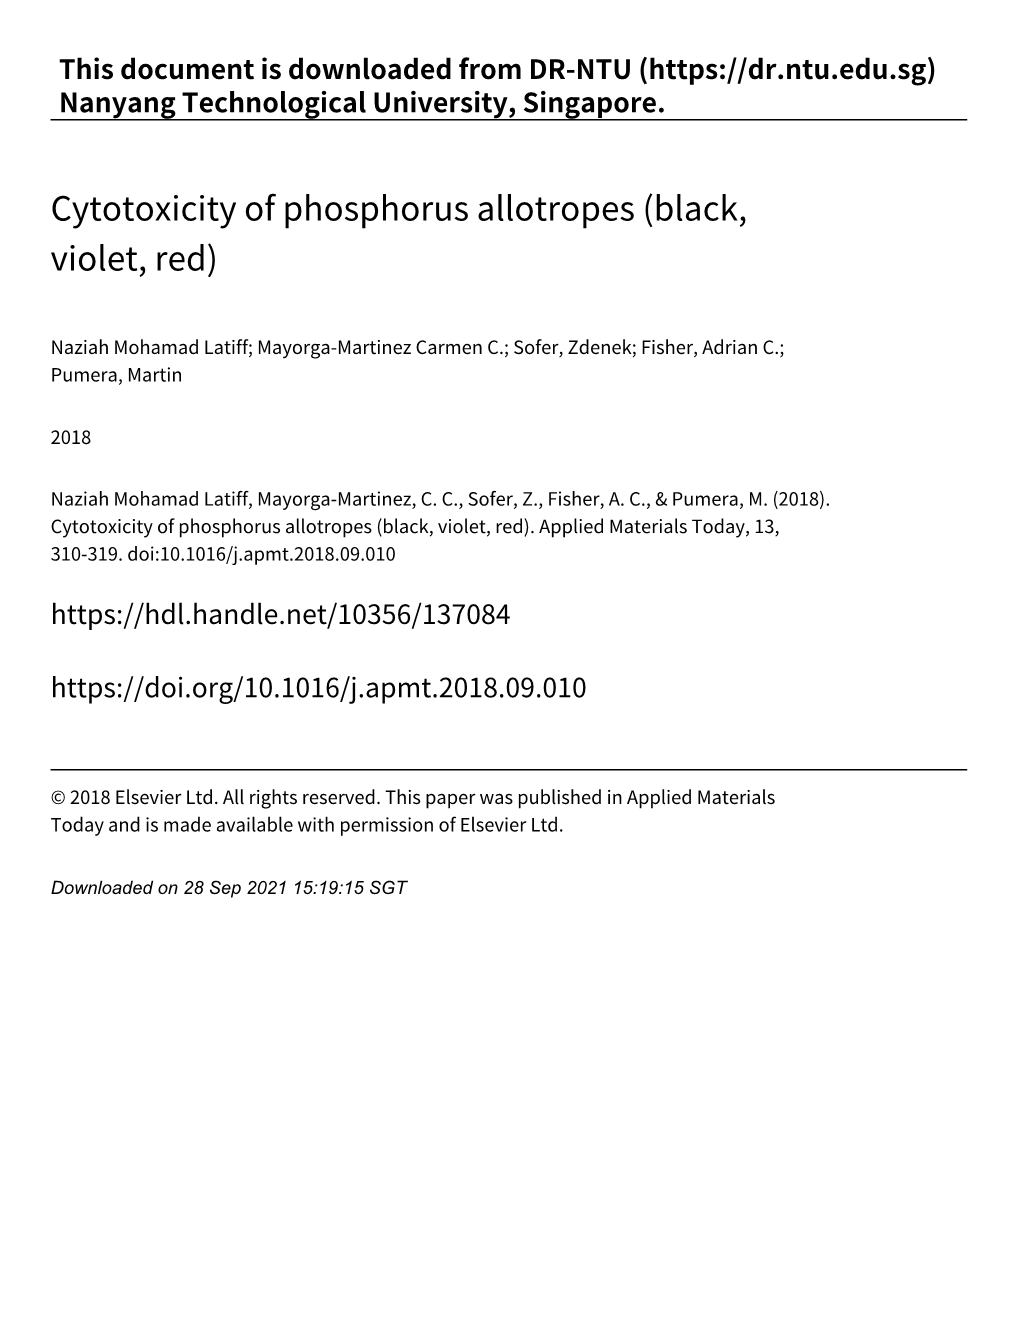 Cytotoxicity of Phosphorus Allotropes (Black, Violet, Red)